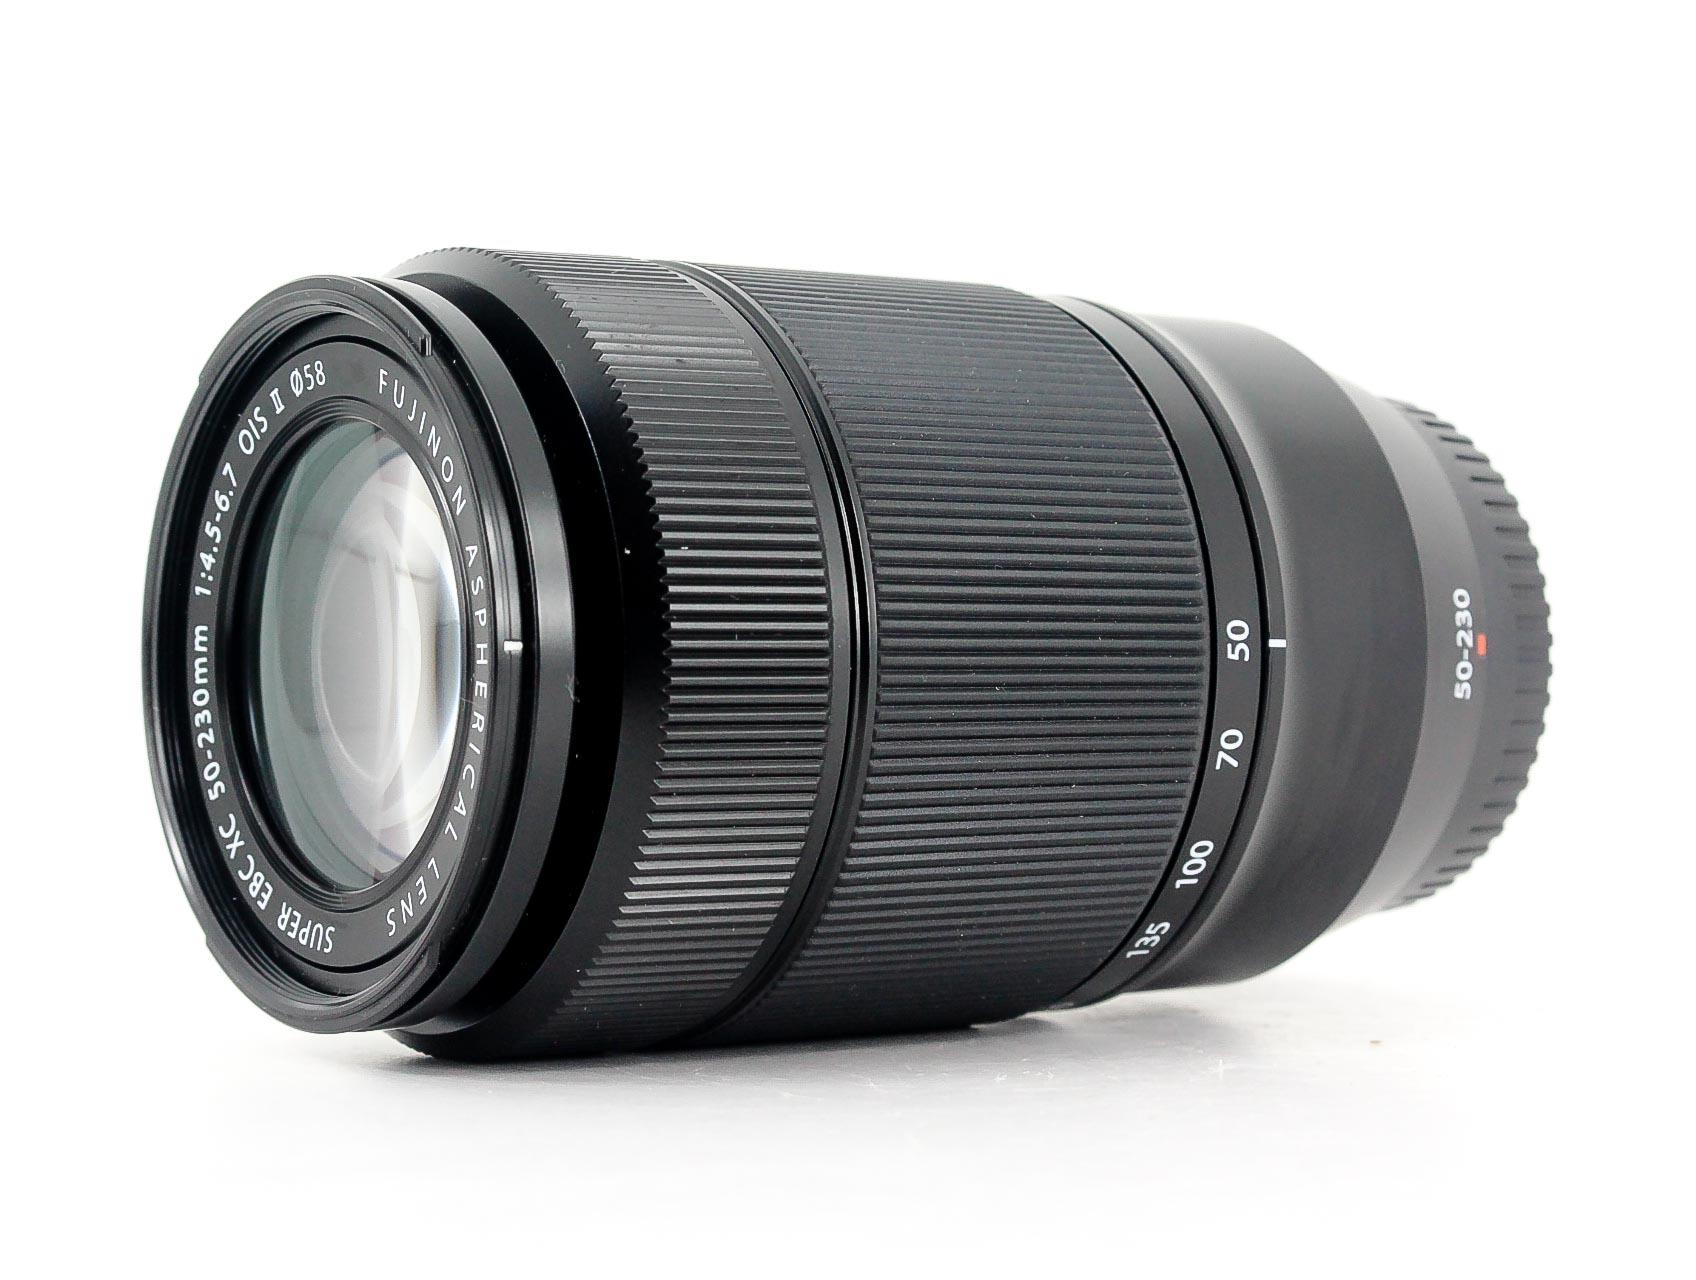 Fujifilm XC 50-230mm f4.5-6.7 OIS II Lens - Lenses and Cameras